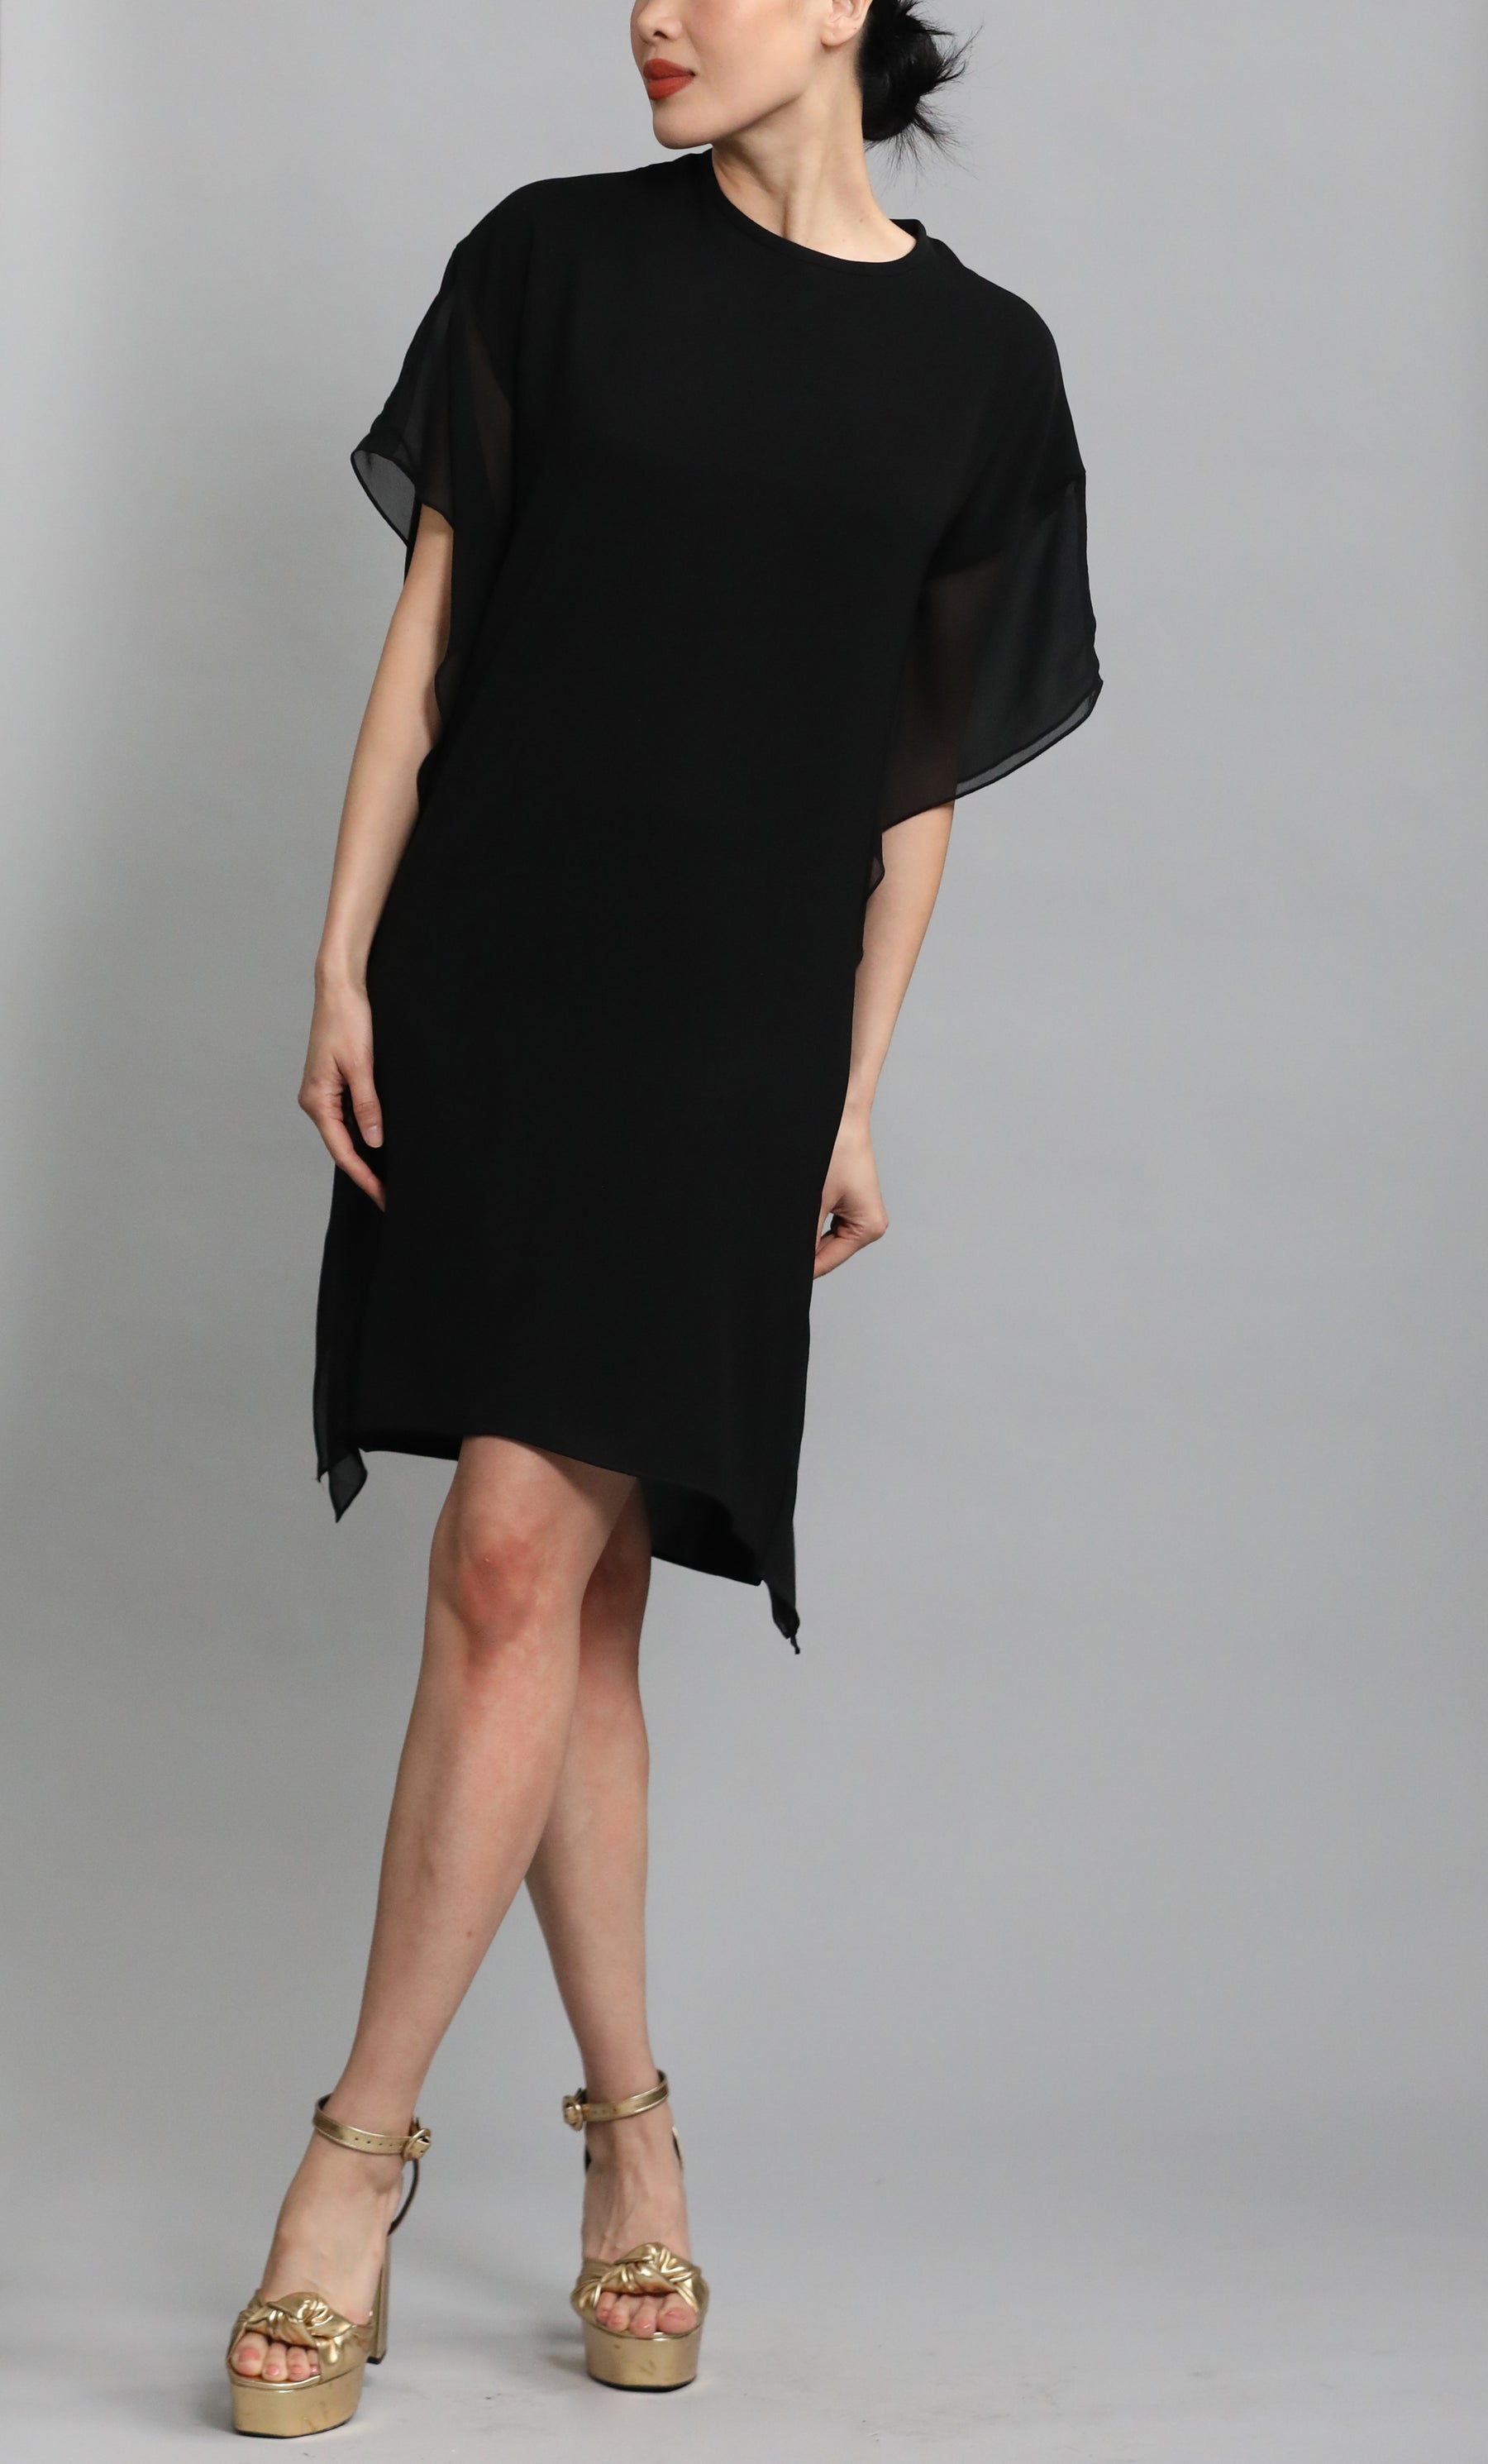 Black Mini Dress With Chiffon Sleeves